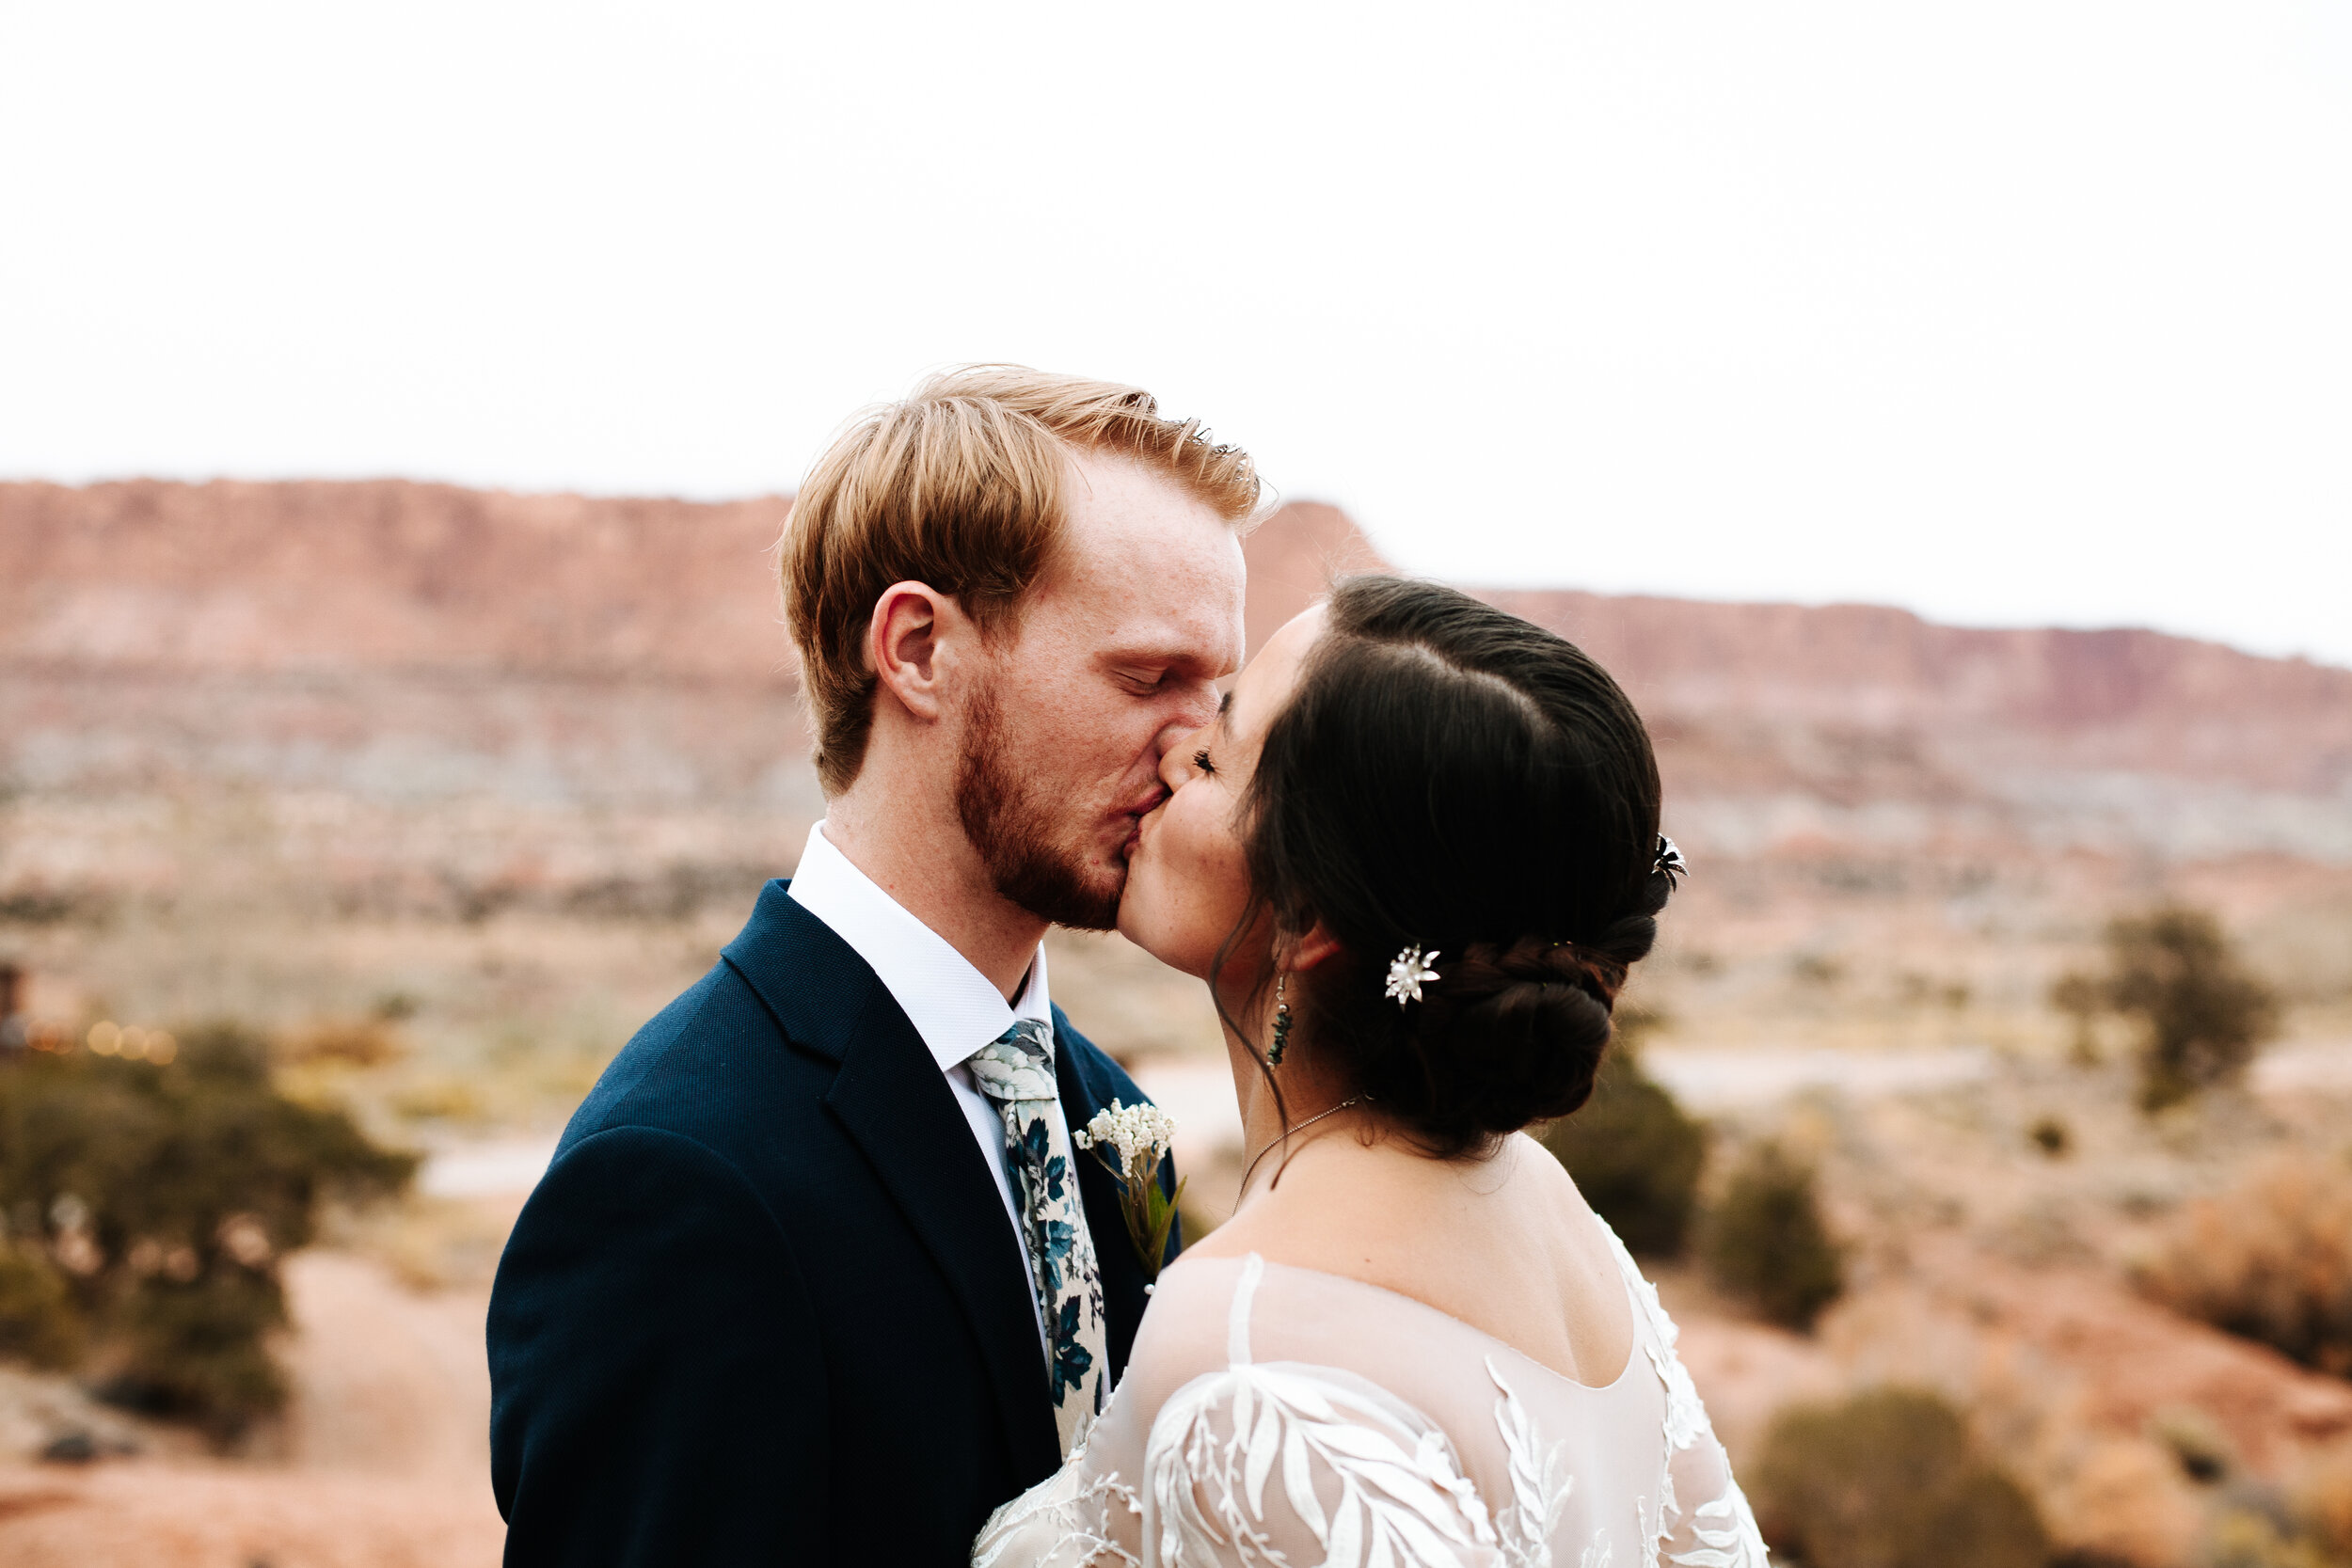 Couple kissing at their wedding in Moab, Utah.